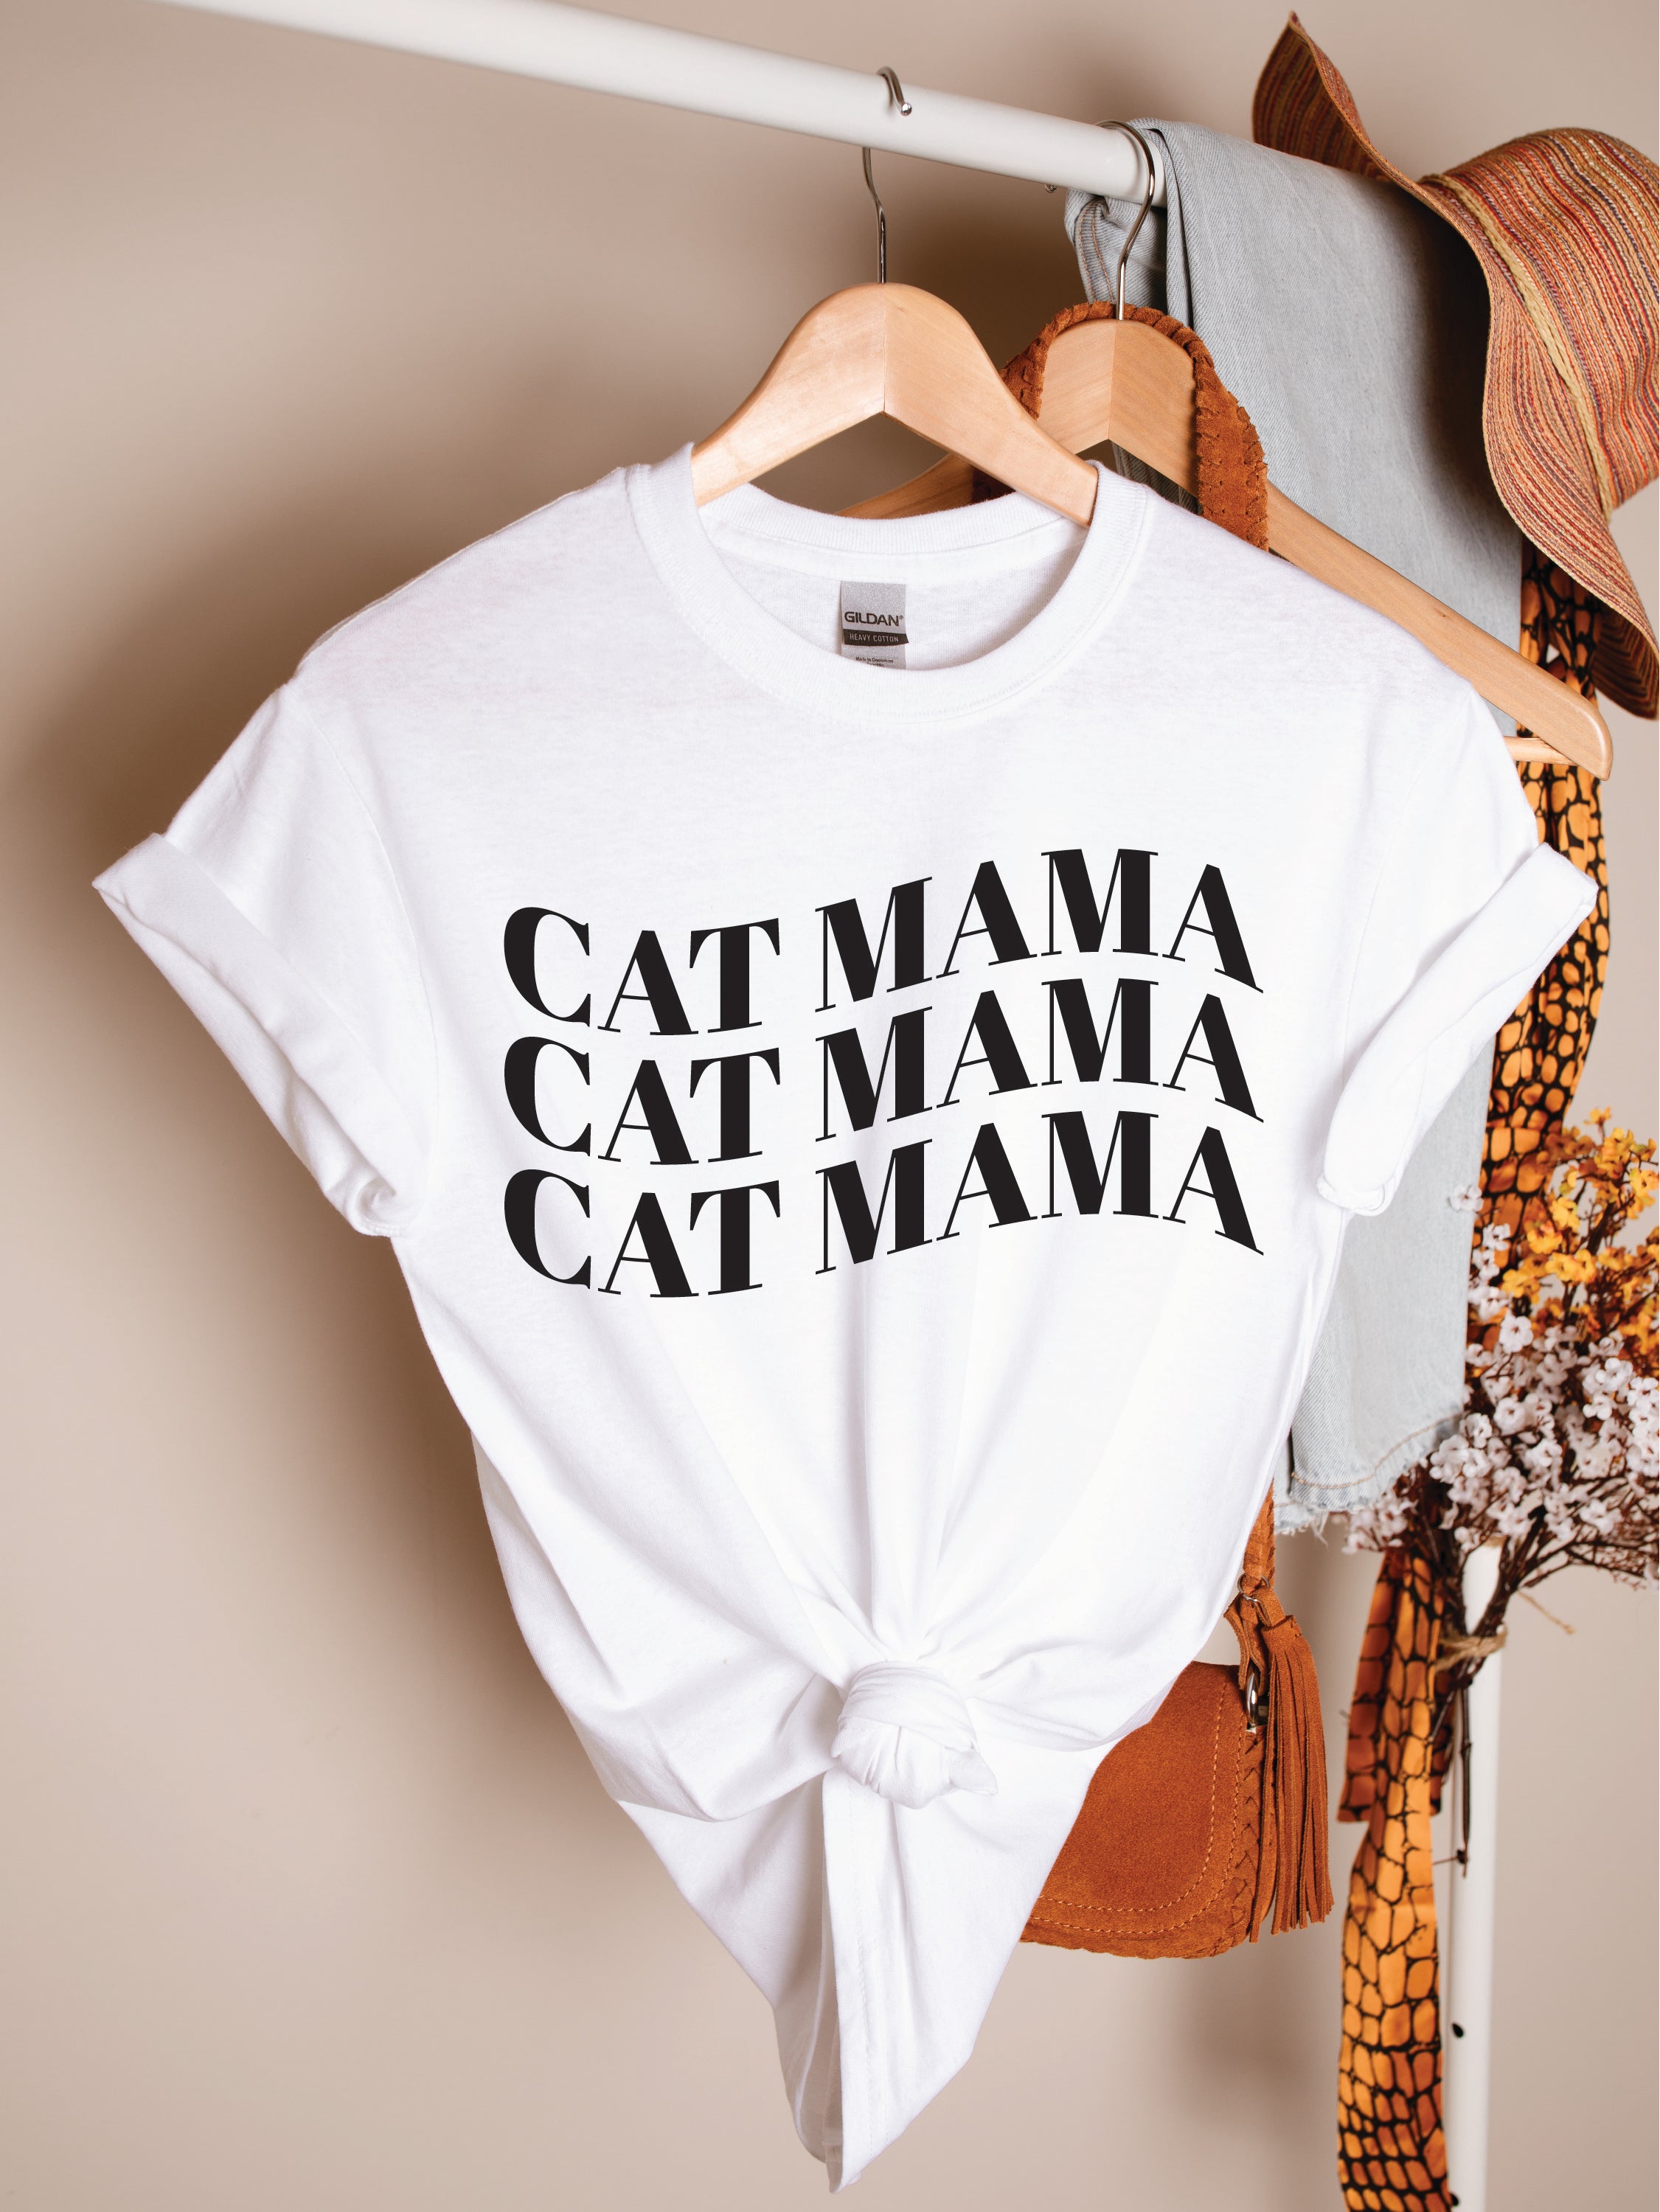 Cat Mama Apparel